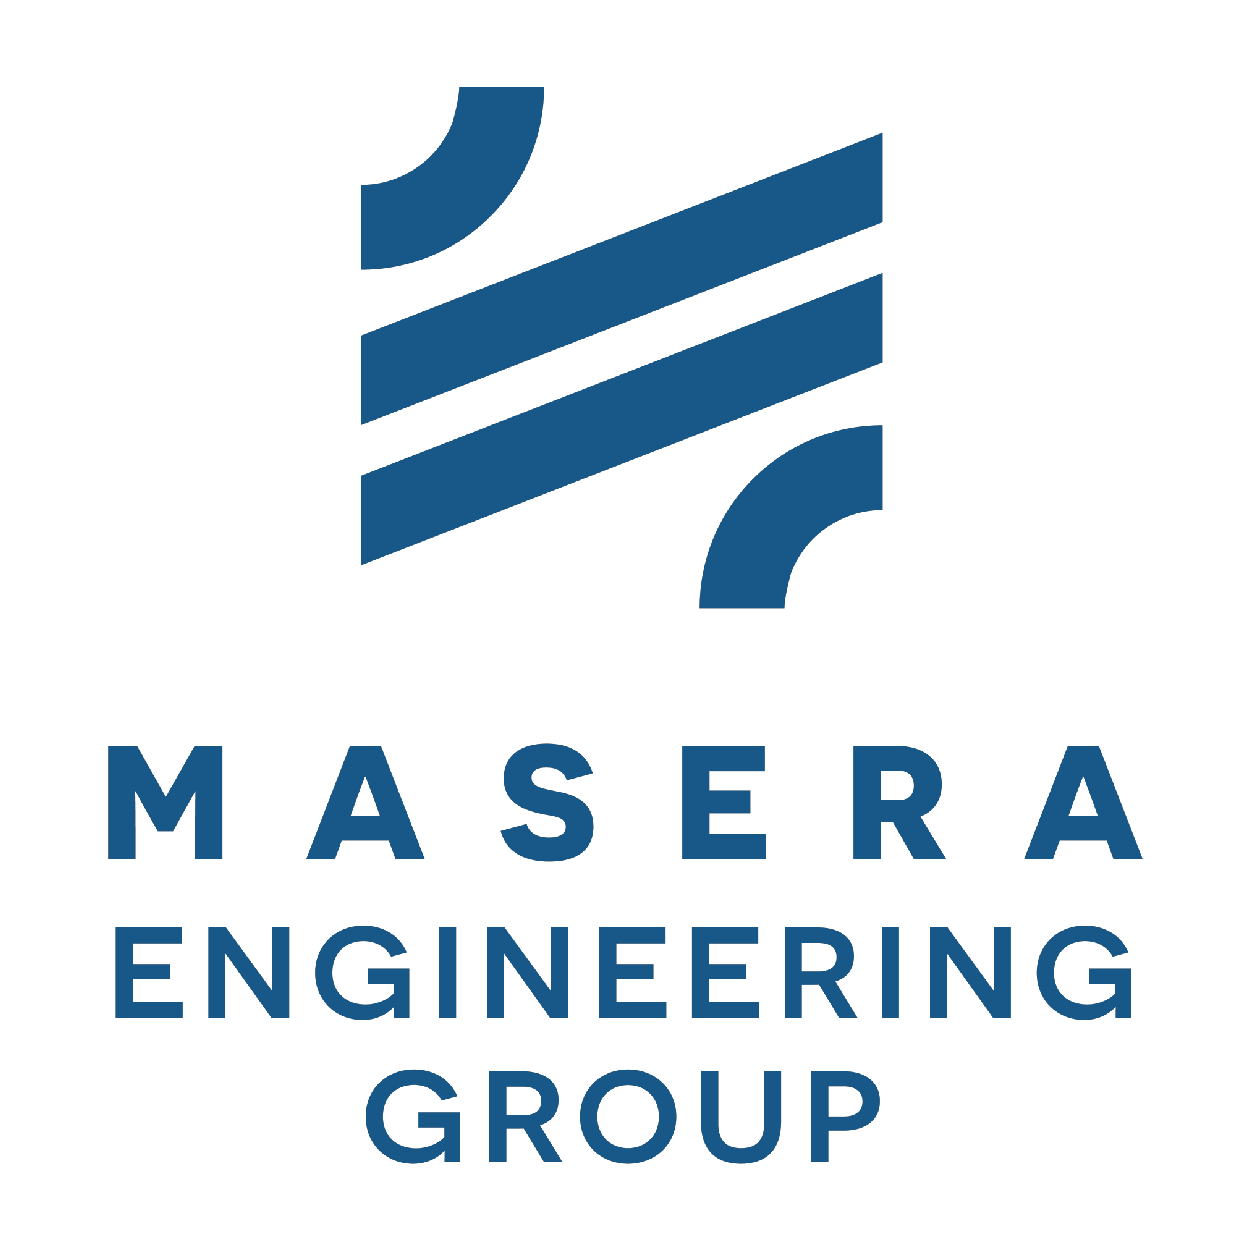 Masera Engineering Group